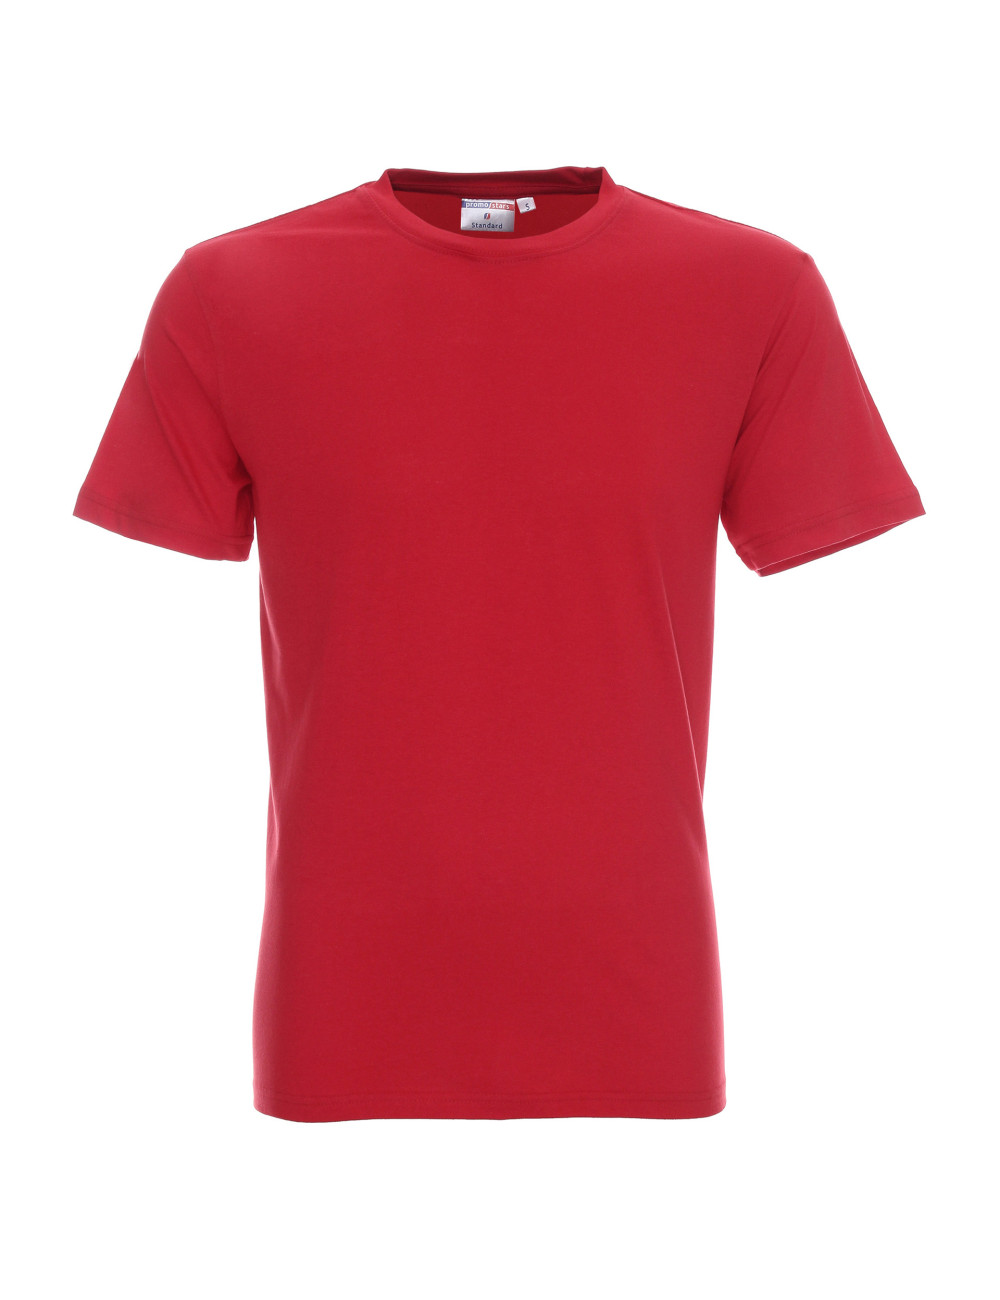 Koszulka męska standard 150 czerwony Promostars